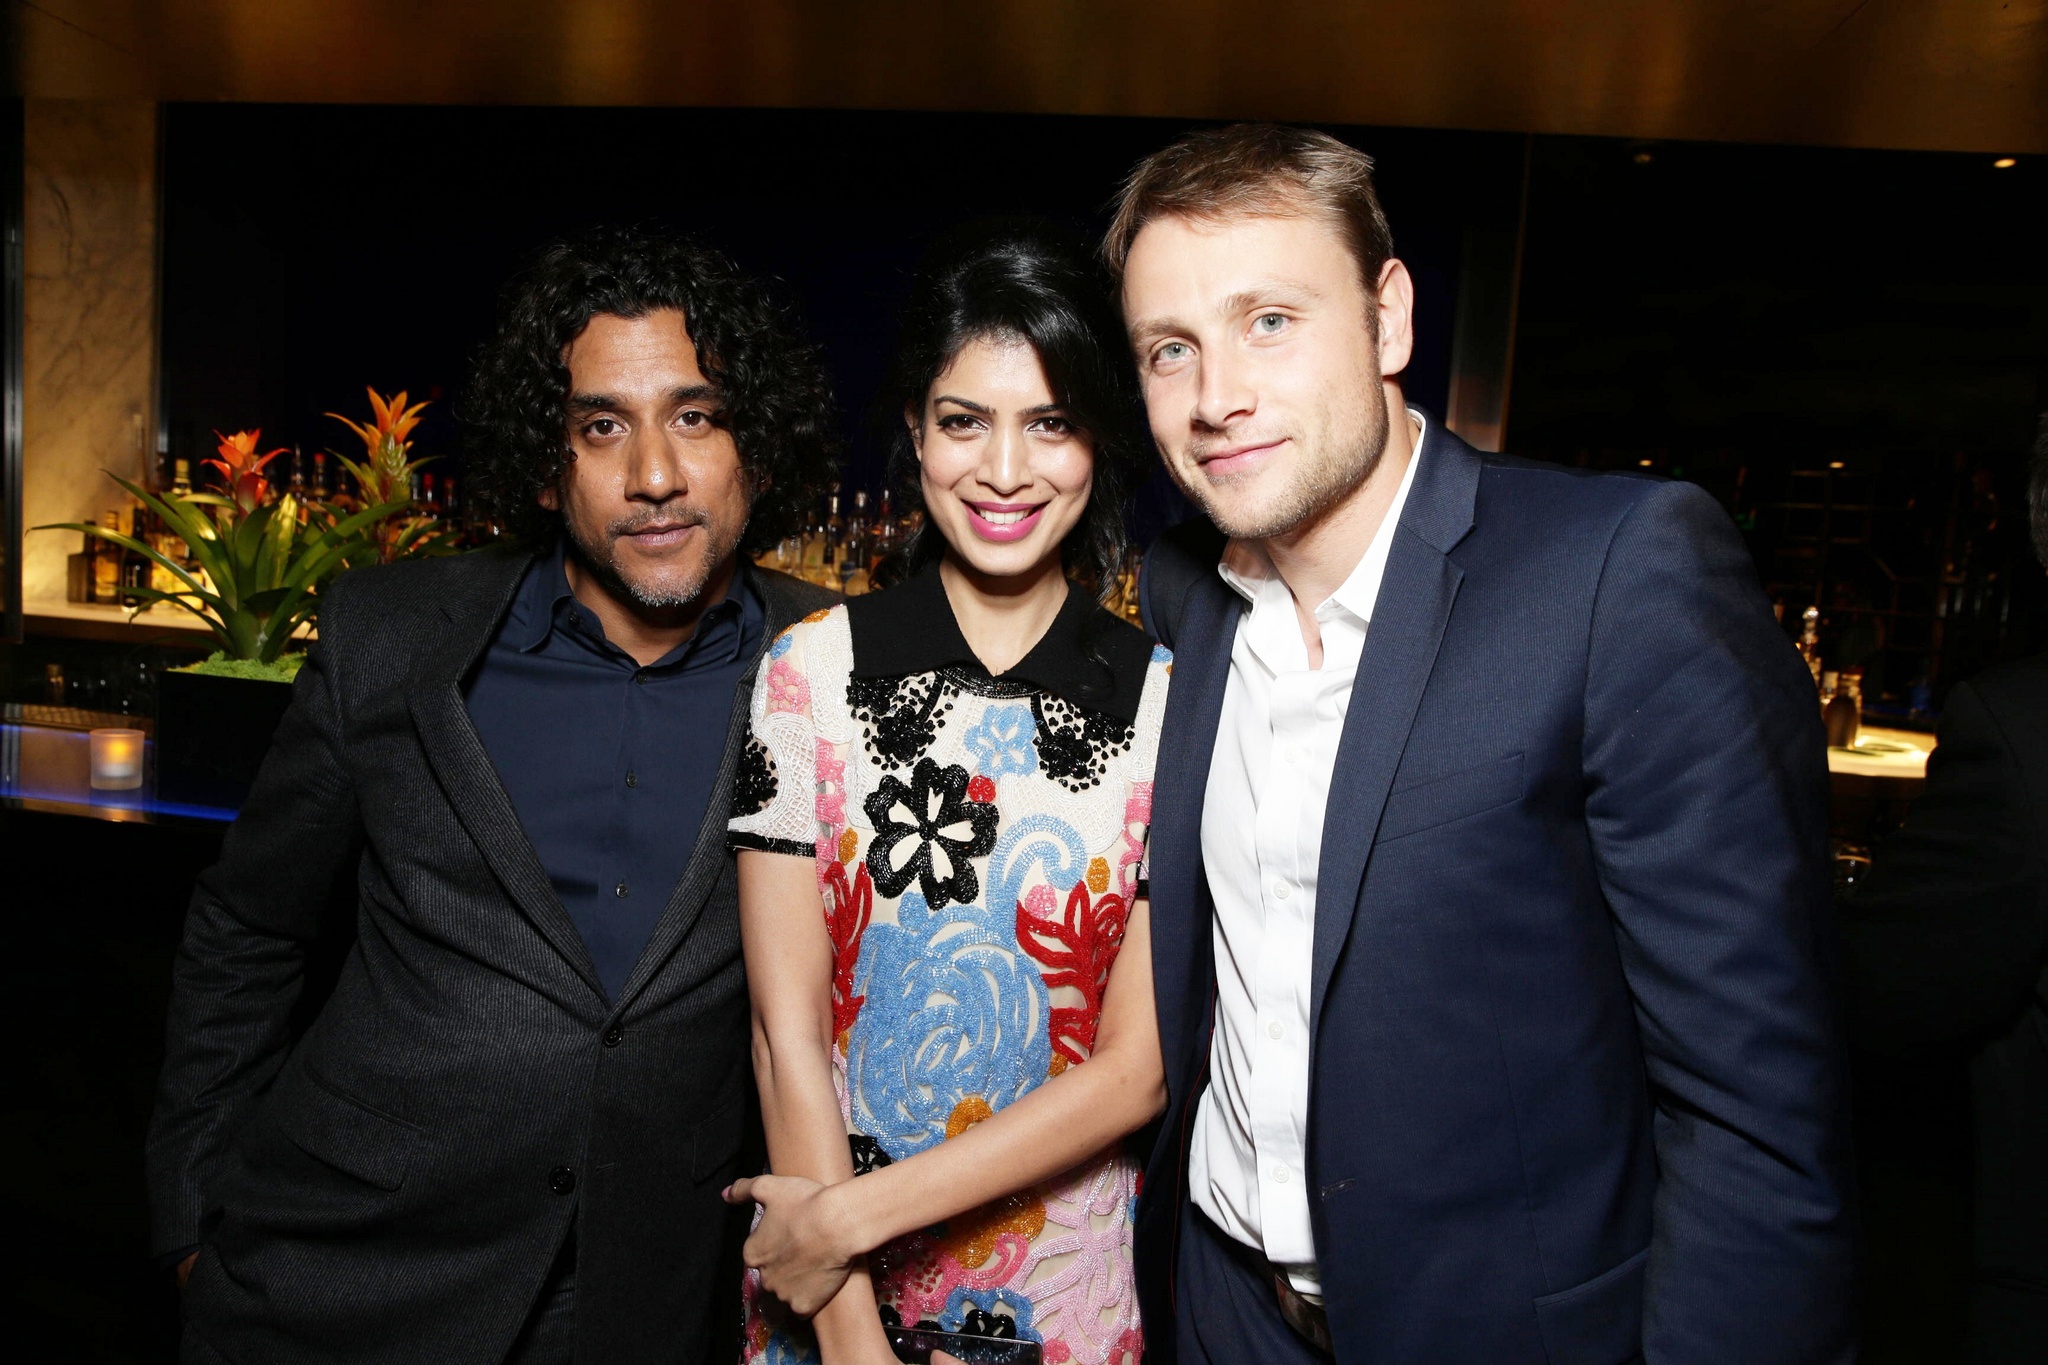 Naveen Andrews, Max Riemelt and Tina Desai at event of Sense8 (2015)